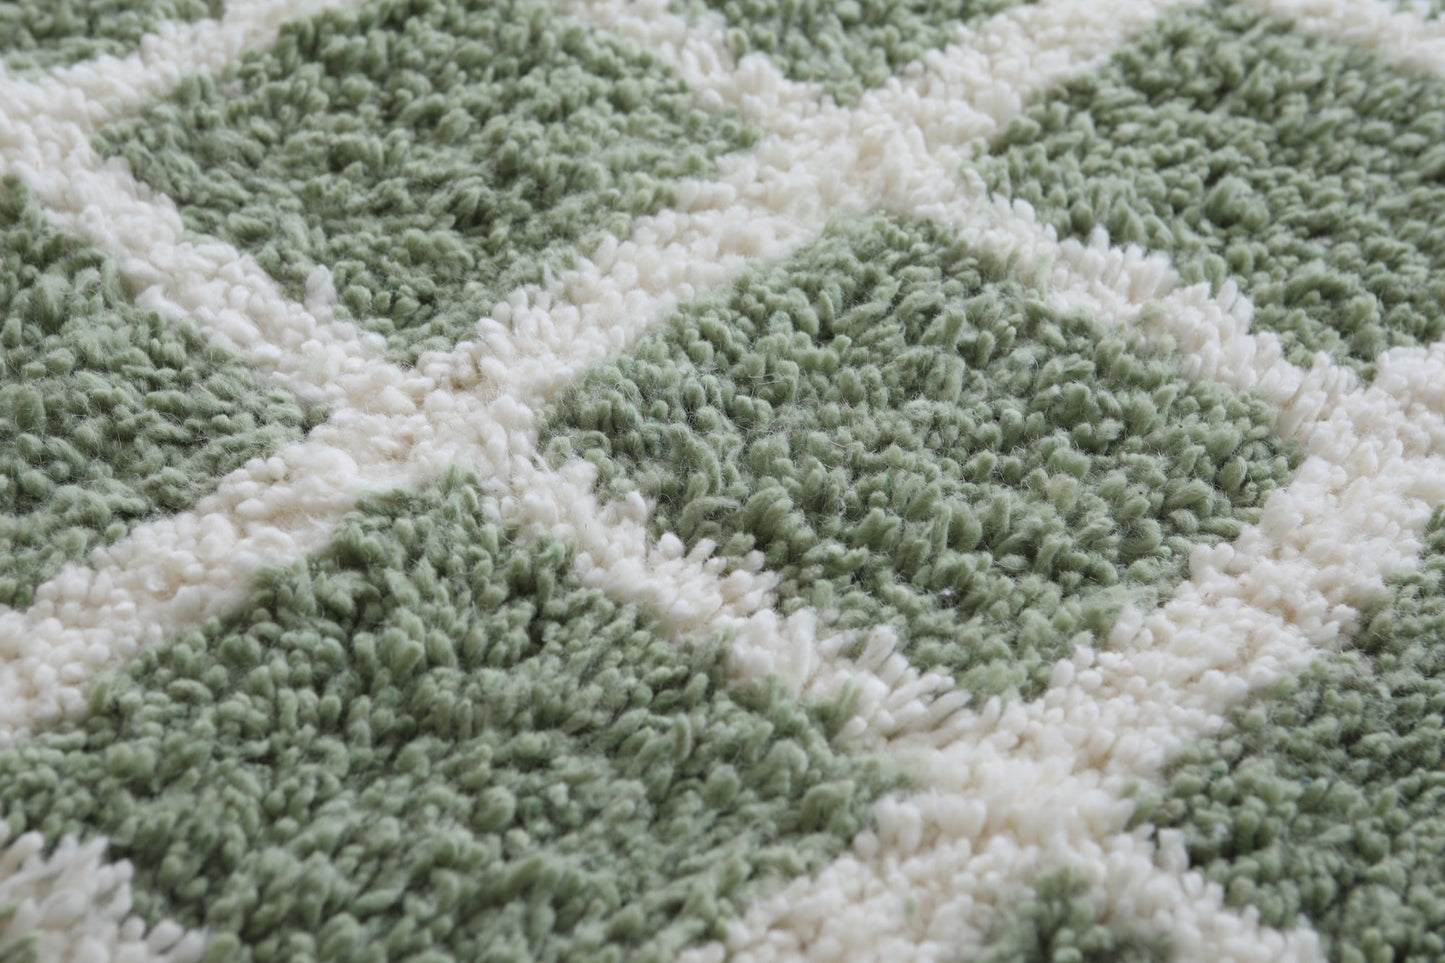 All wool Beni ourain Rug - Green squares - Custom rug